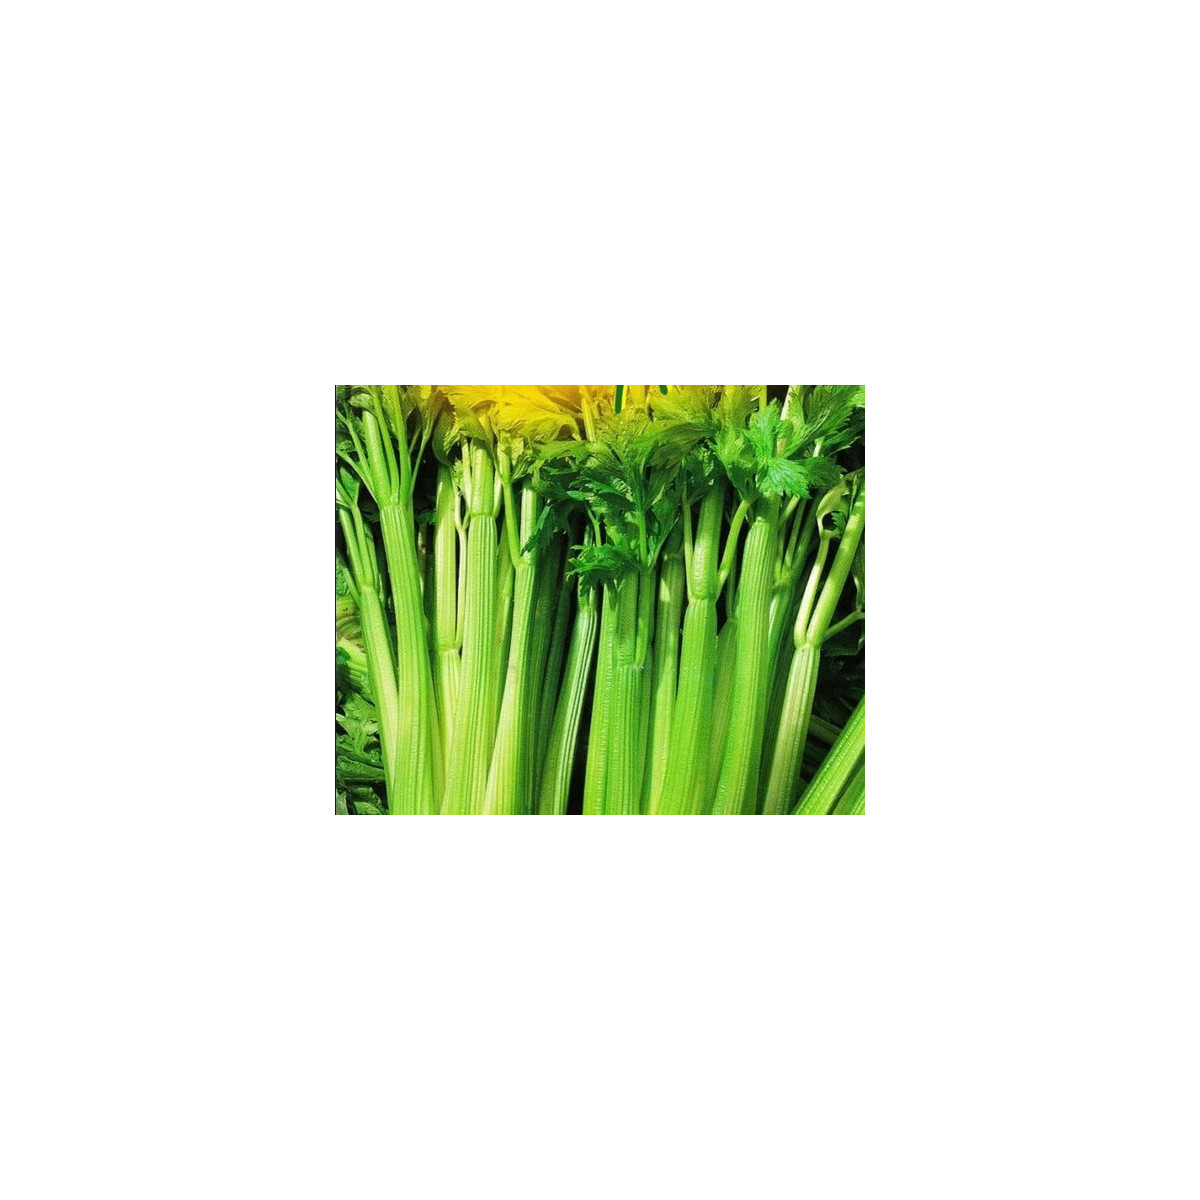 Celer řapíkatý - Apium graveolens - semena - 1 g